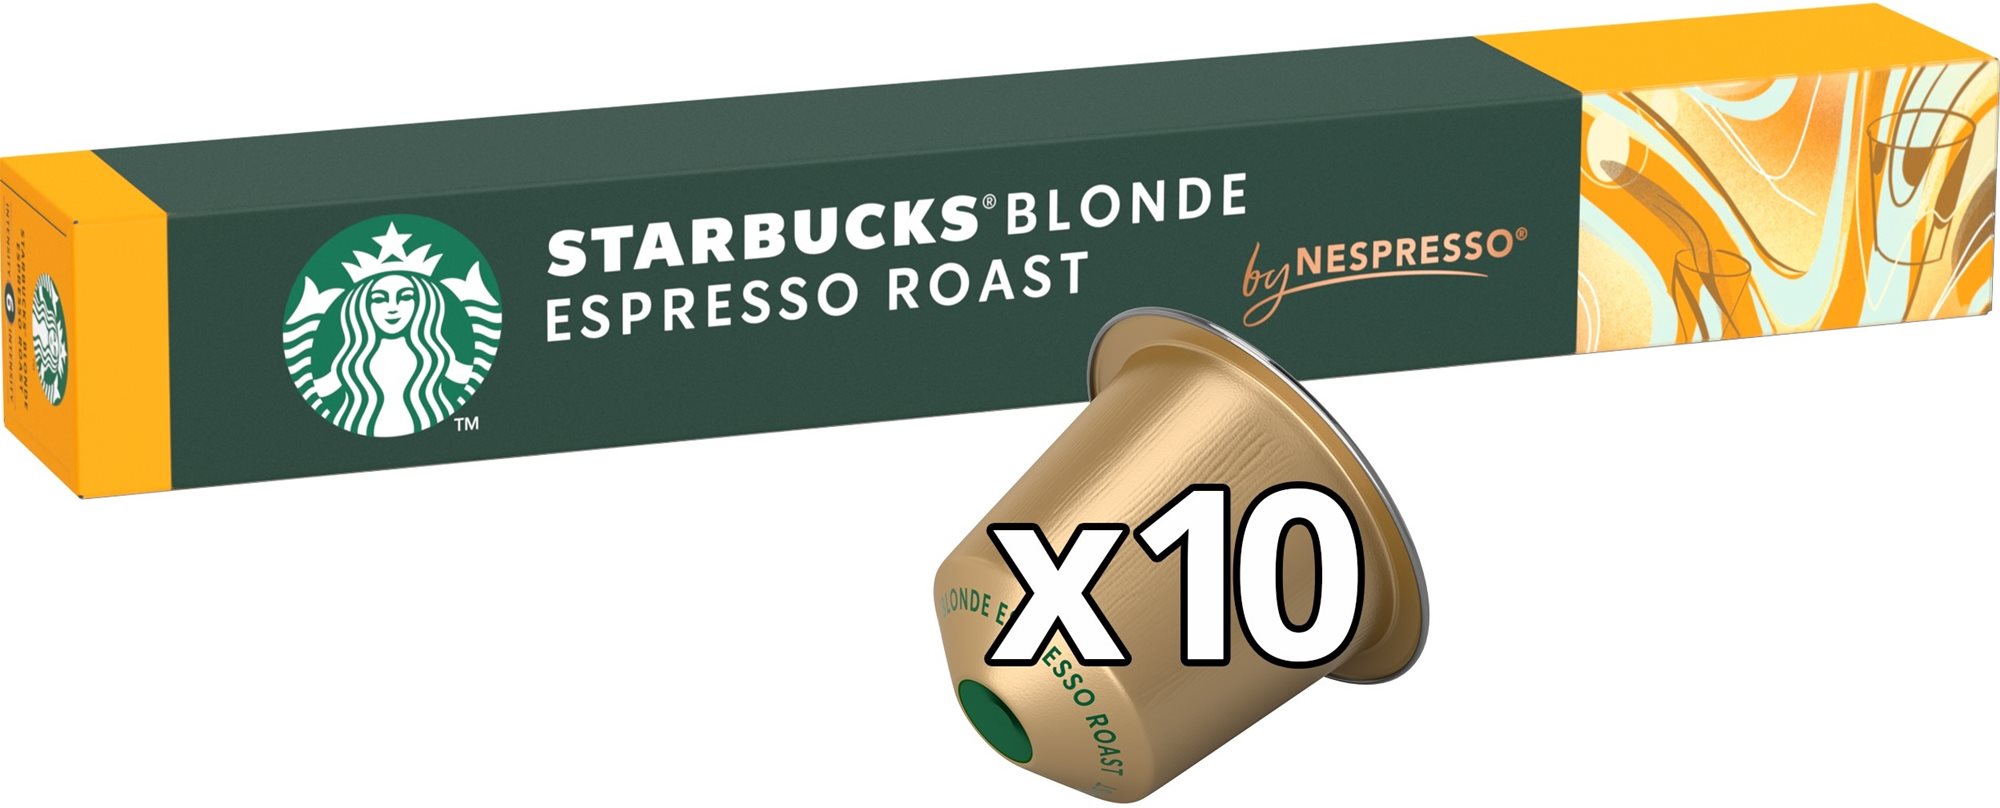 Starbucks by Nespresso Blonde Espresso Roast 10db